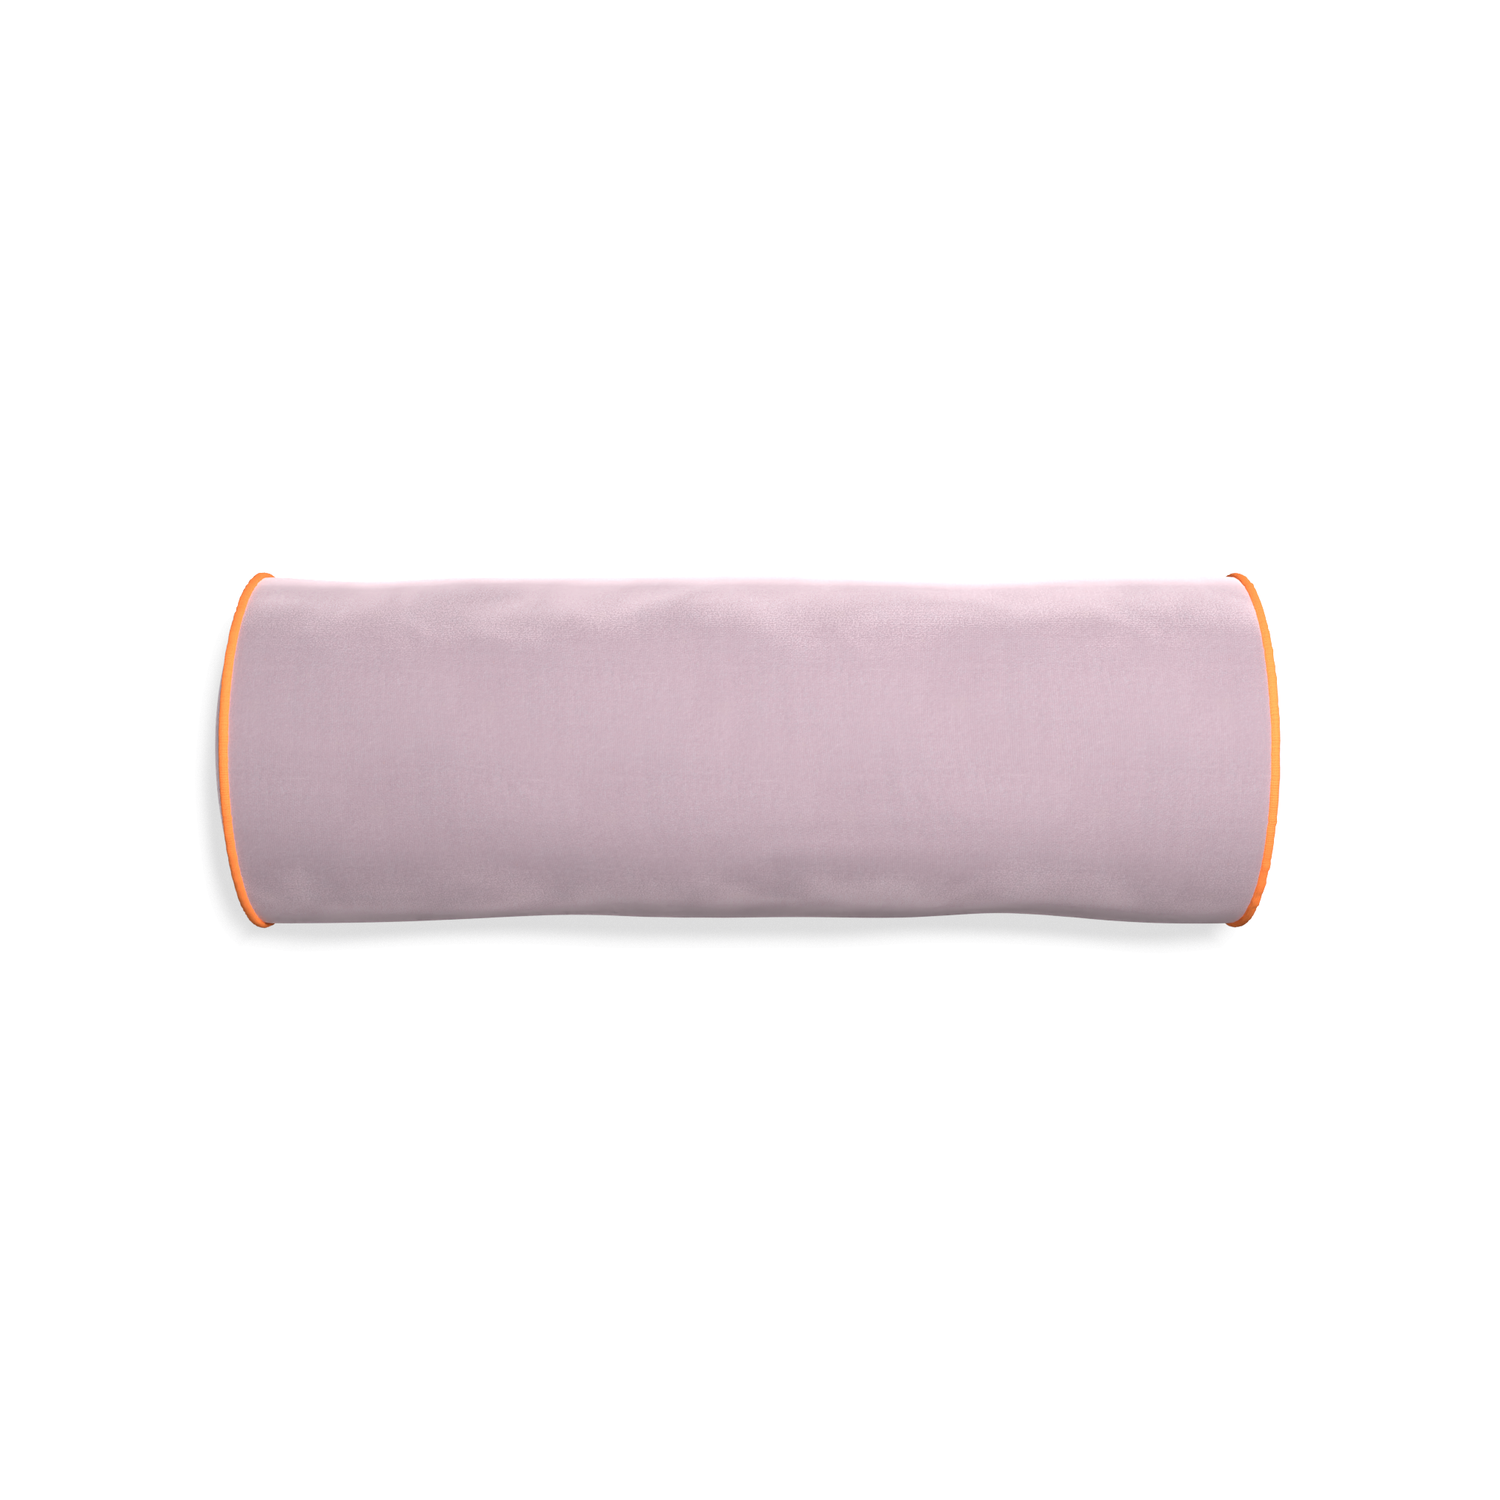 bolster lilac velvet pillow with orange piping